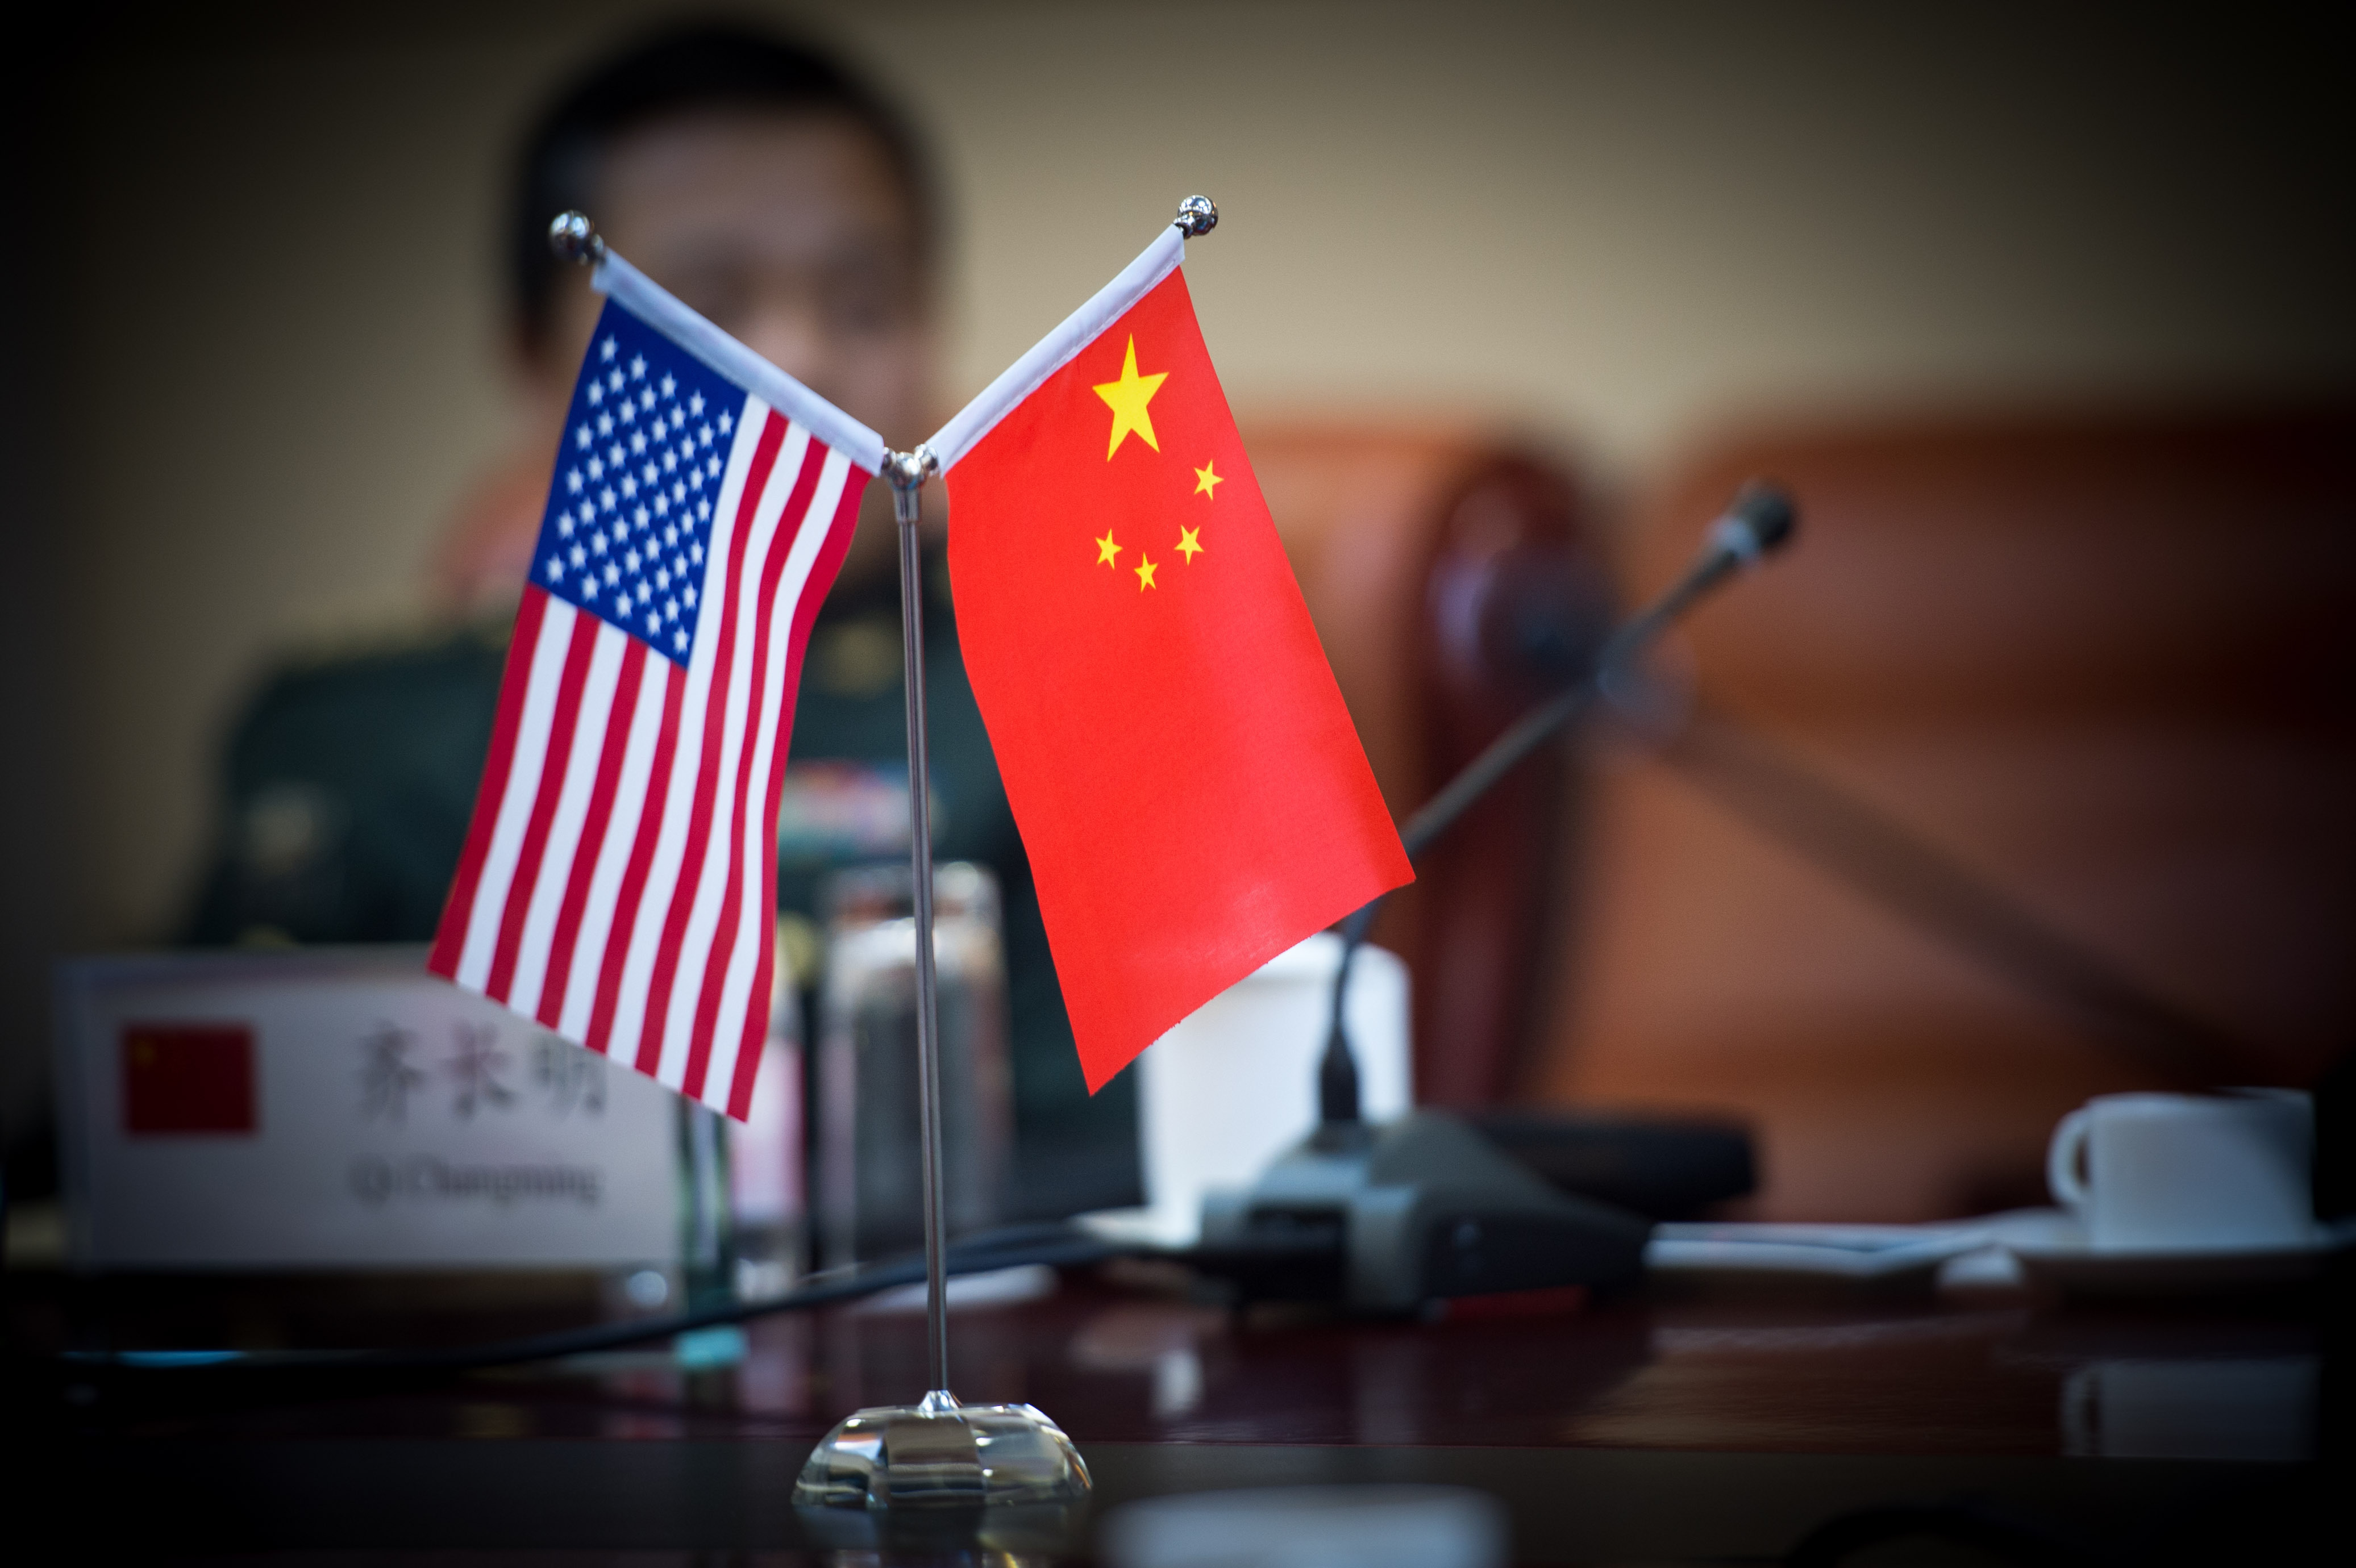 U.S.-China Relations